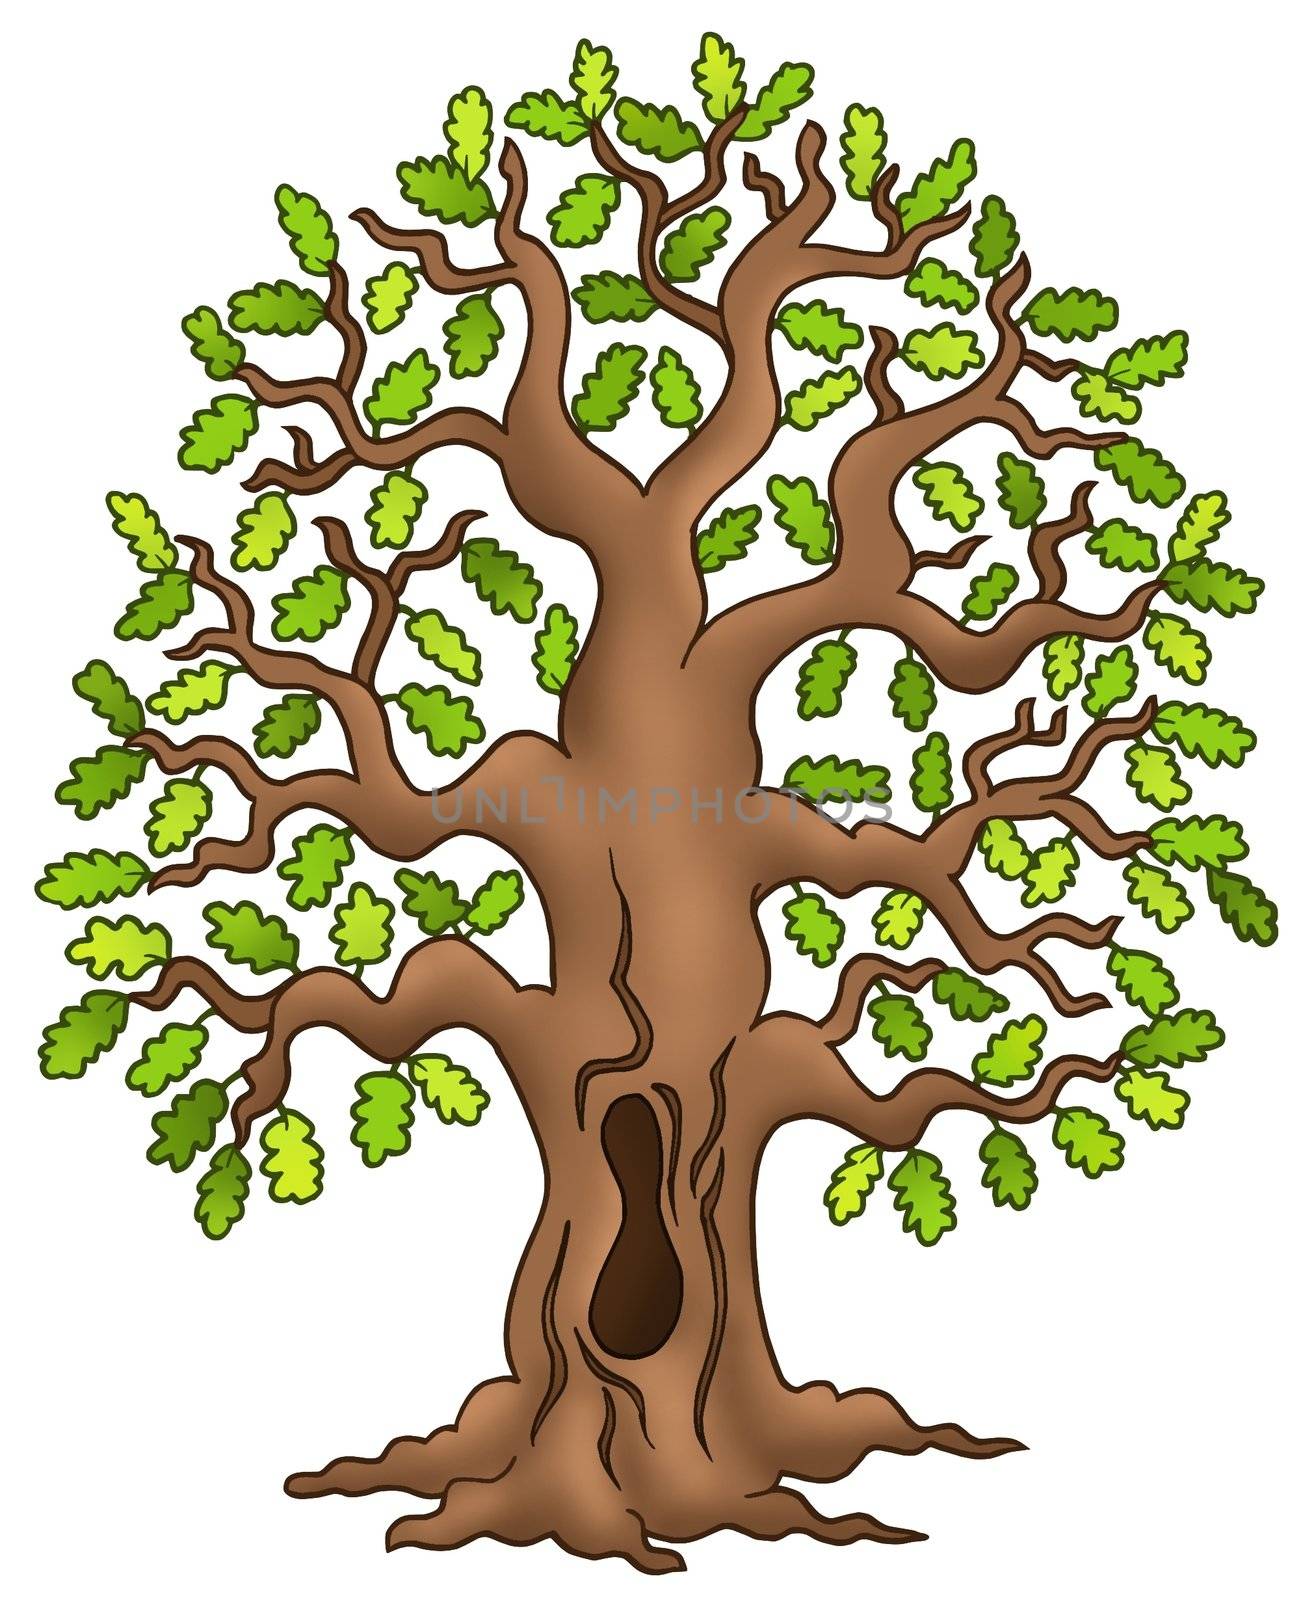 Oak tree on white background - color illustration.